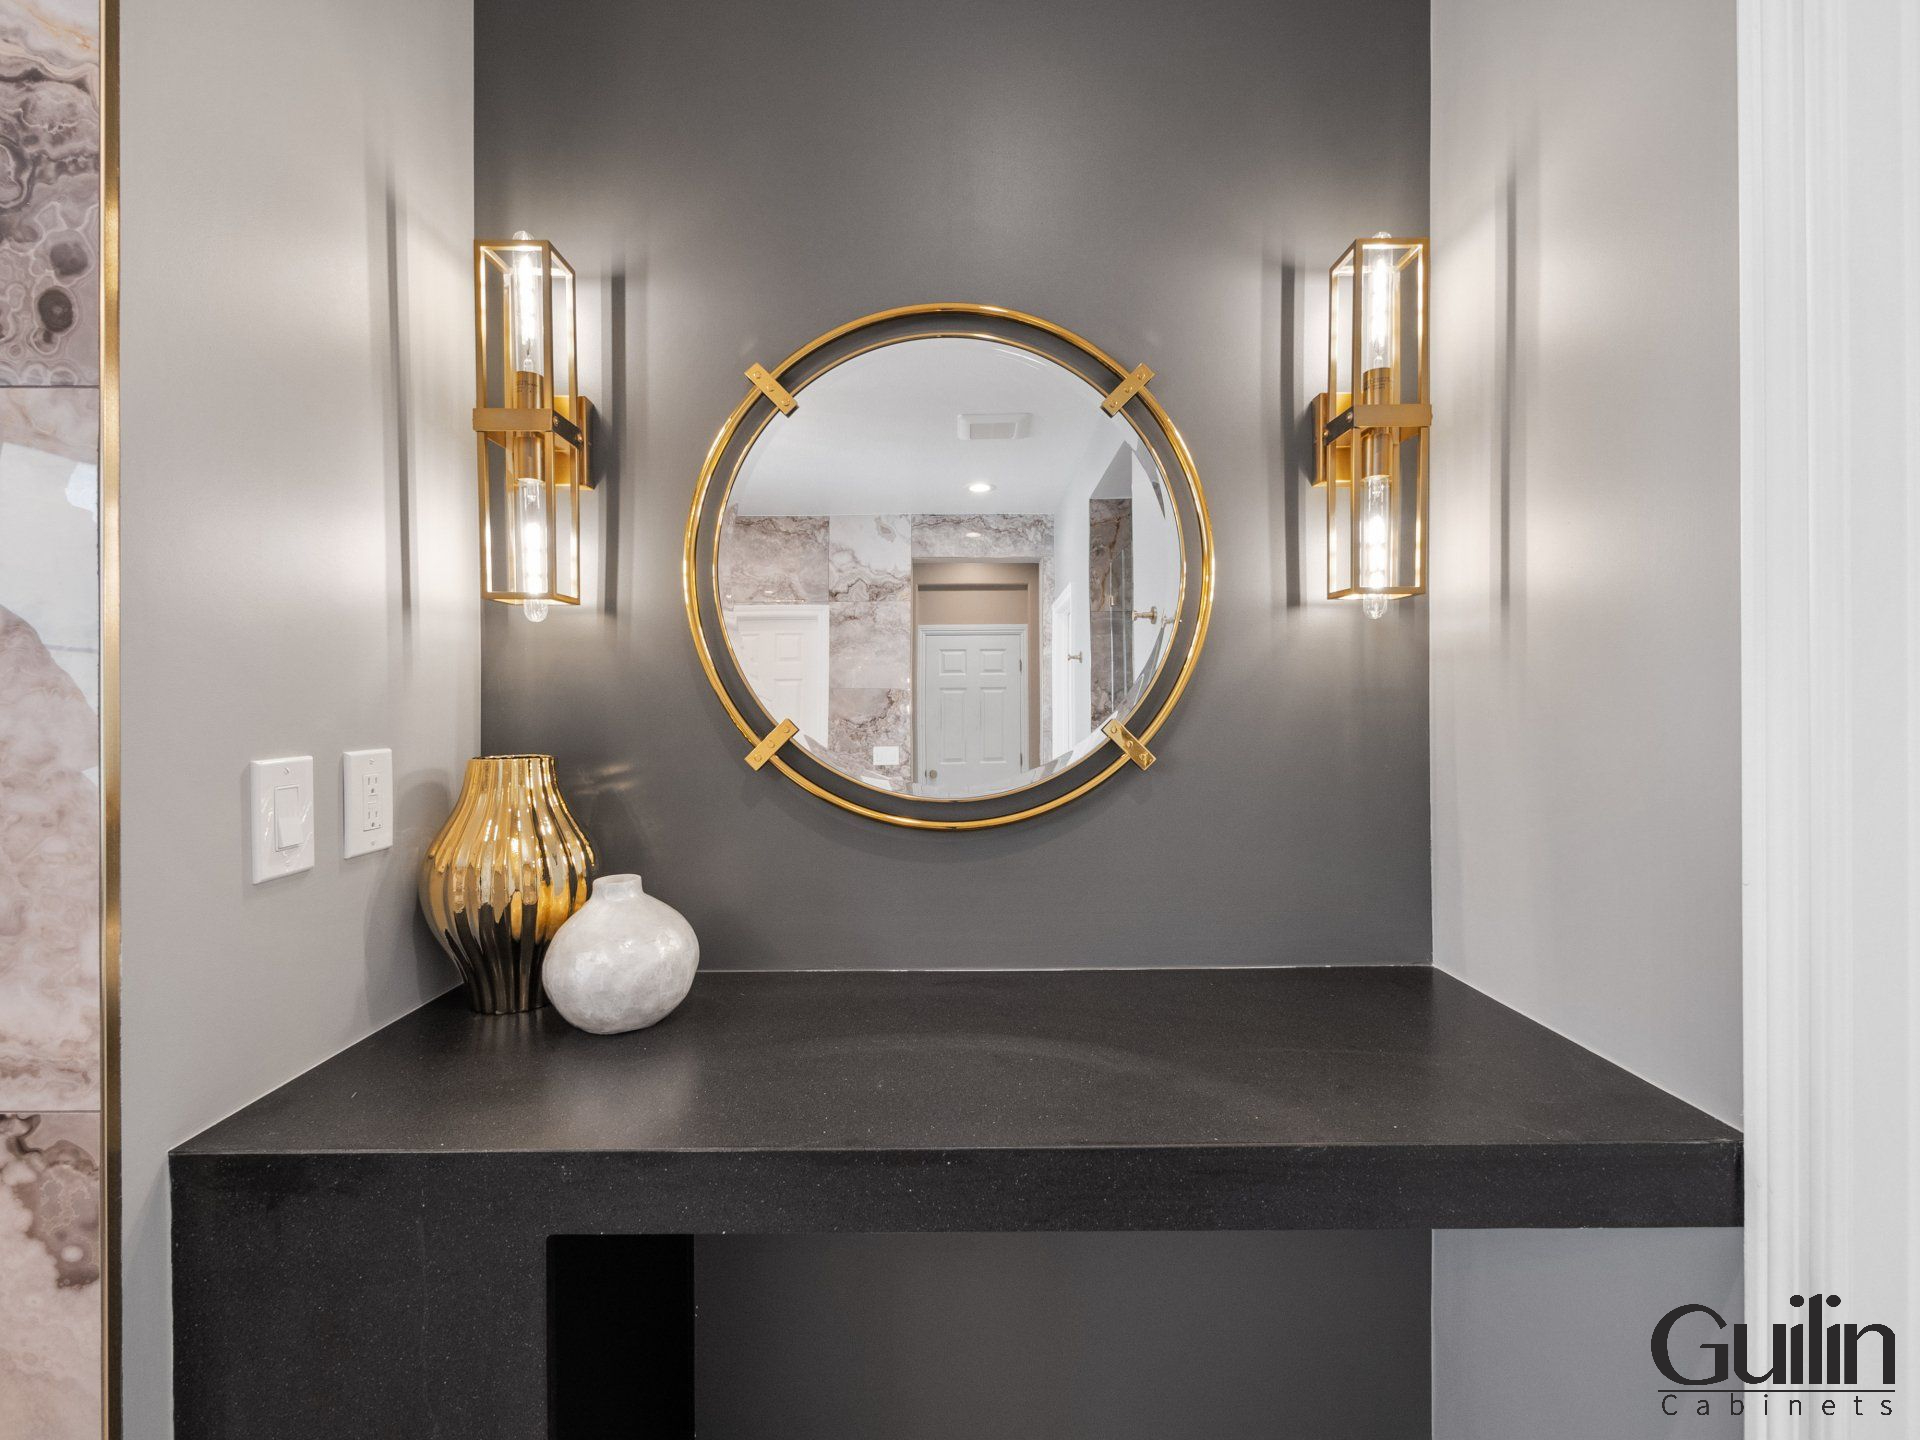 Granite is commonly used in Bathrooms for Vanity Bathroom Countertops